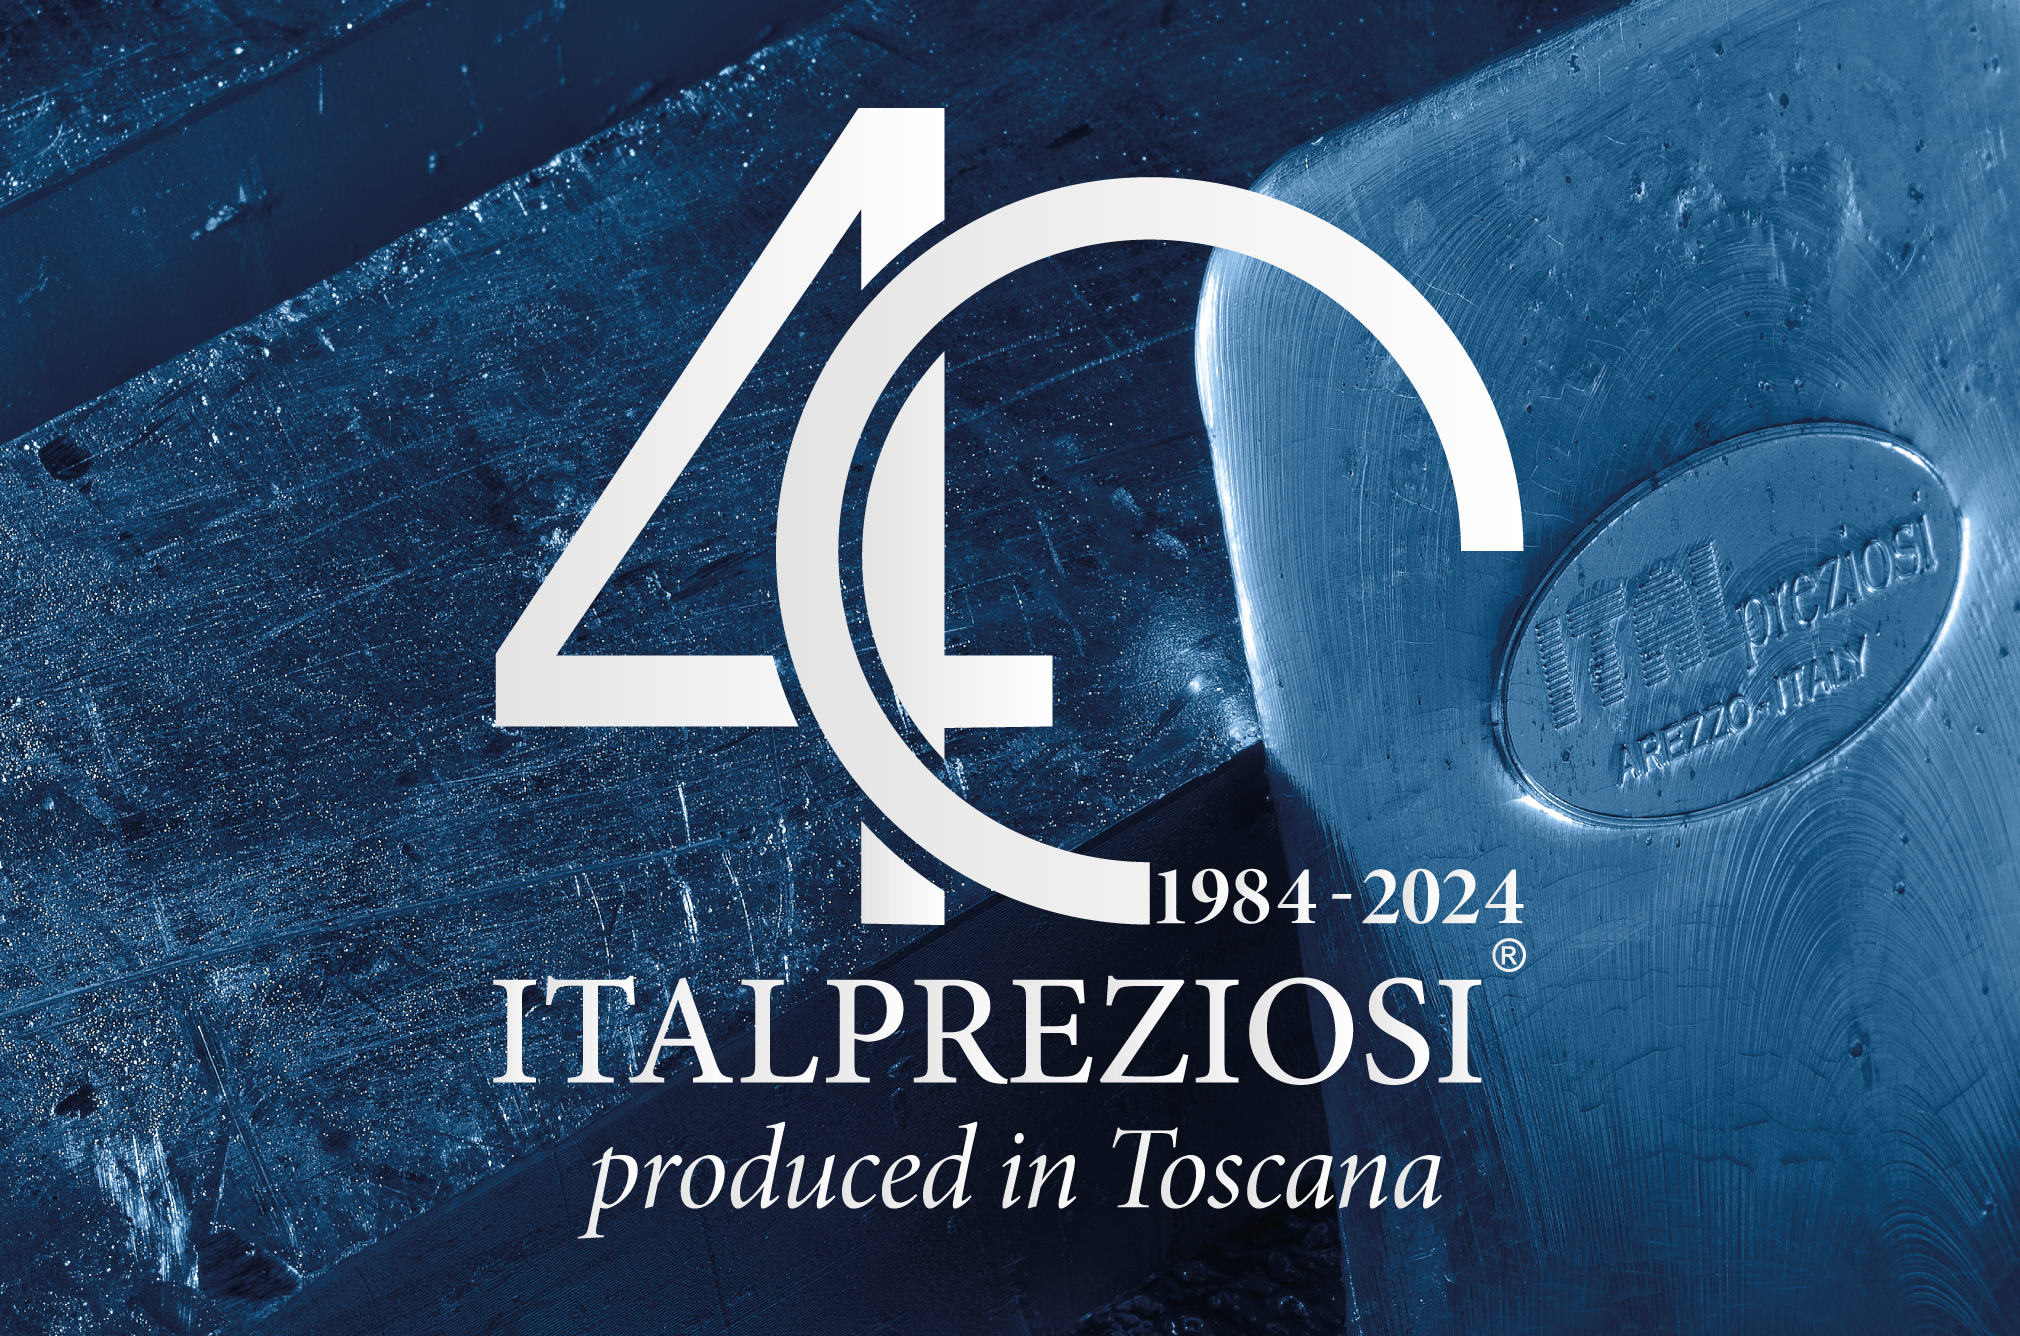 Italpreziosi 40 produced in toscana